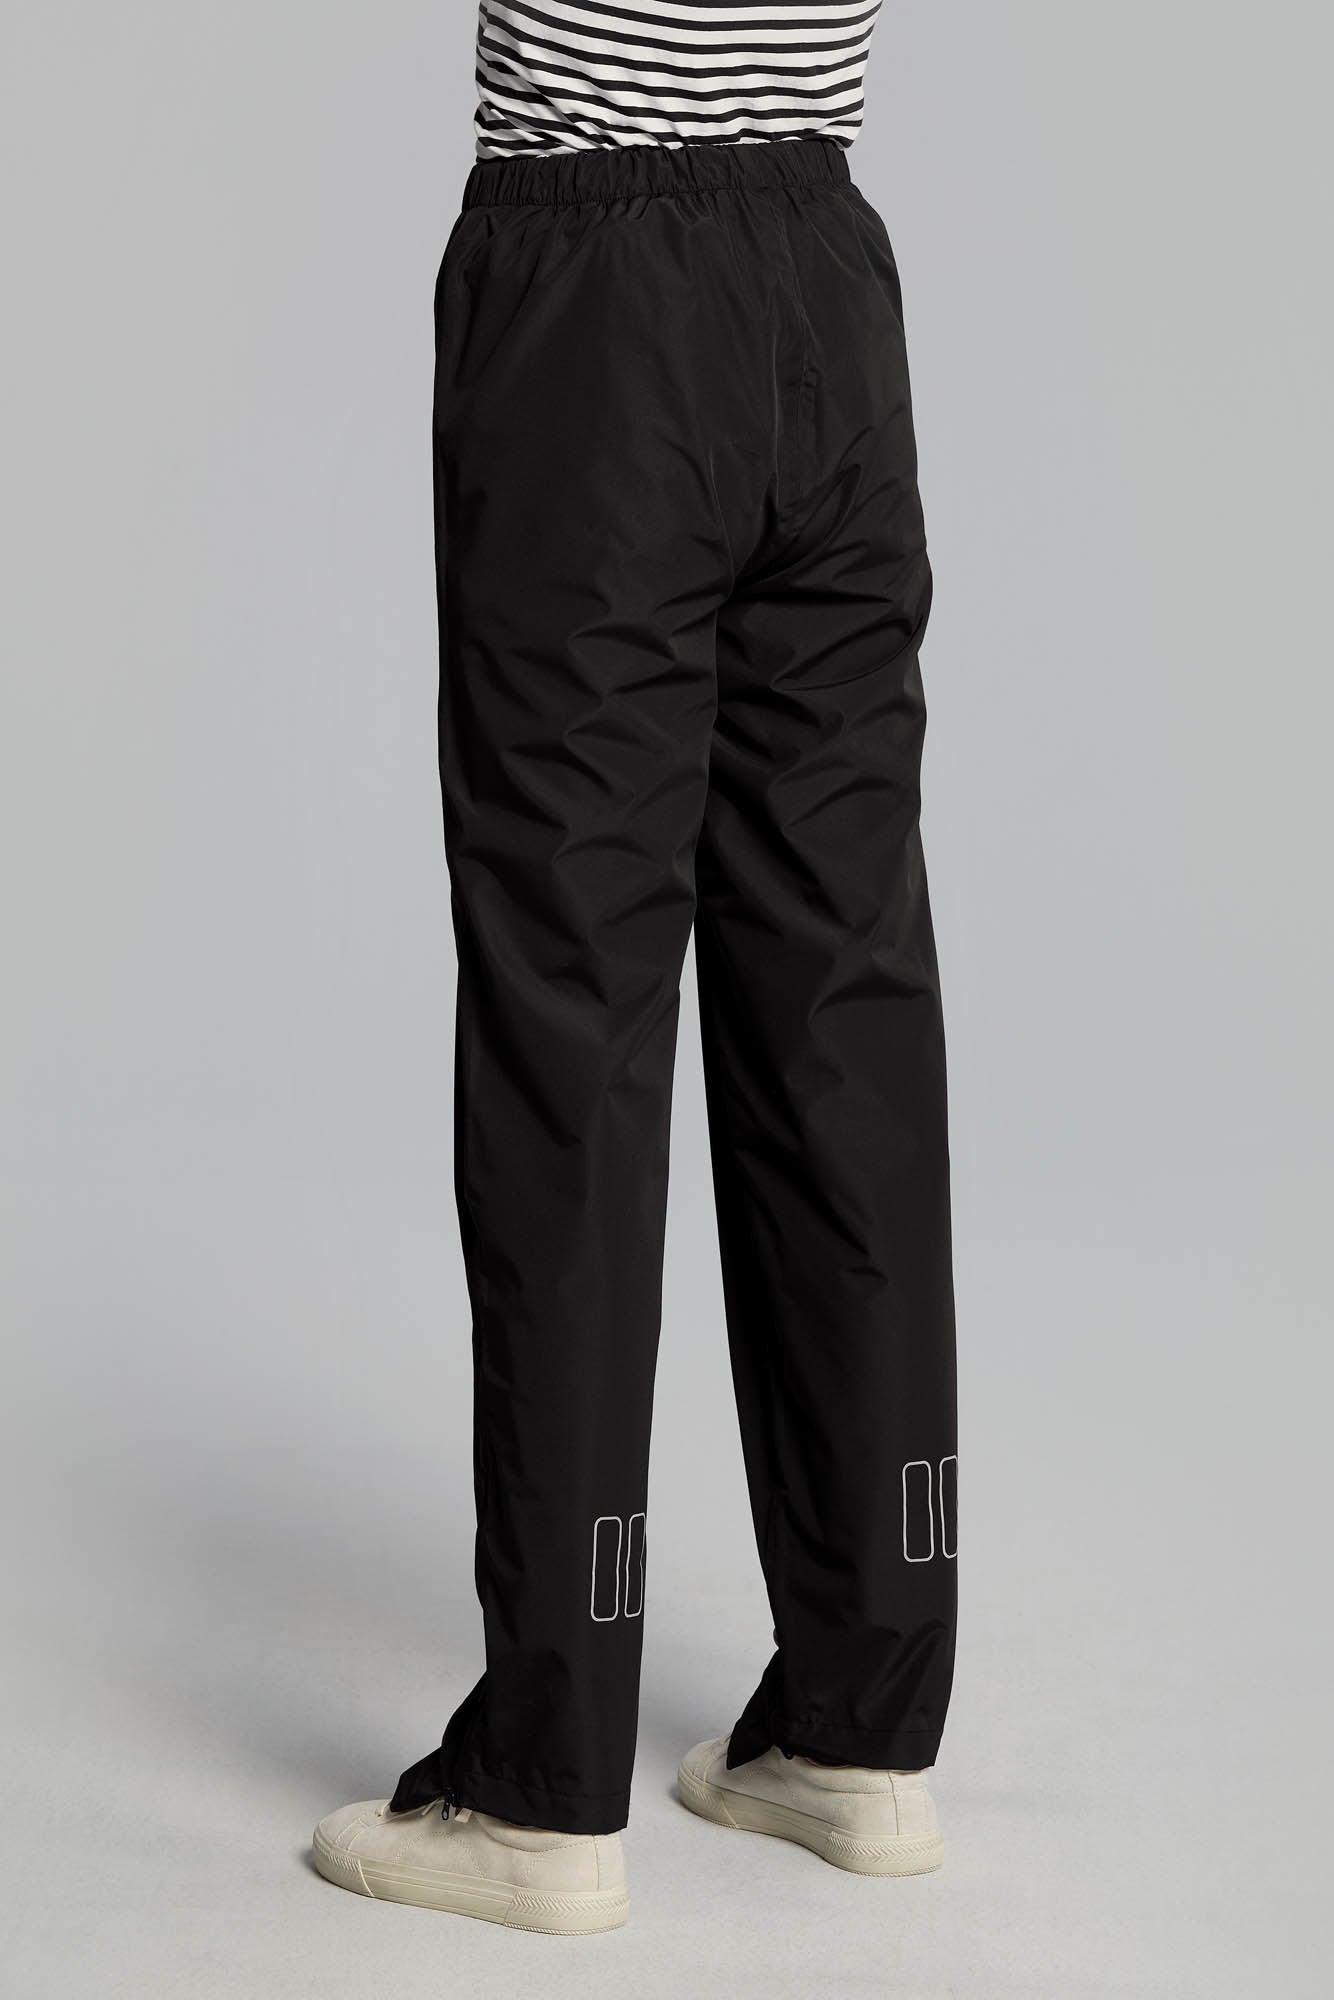 Pantalones impermeables Basil unisex negro